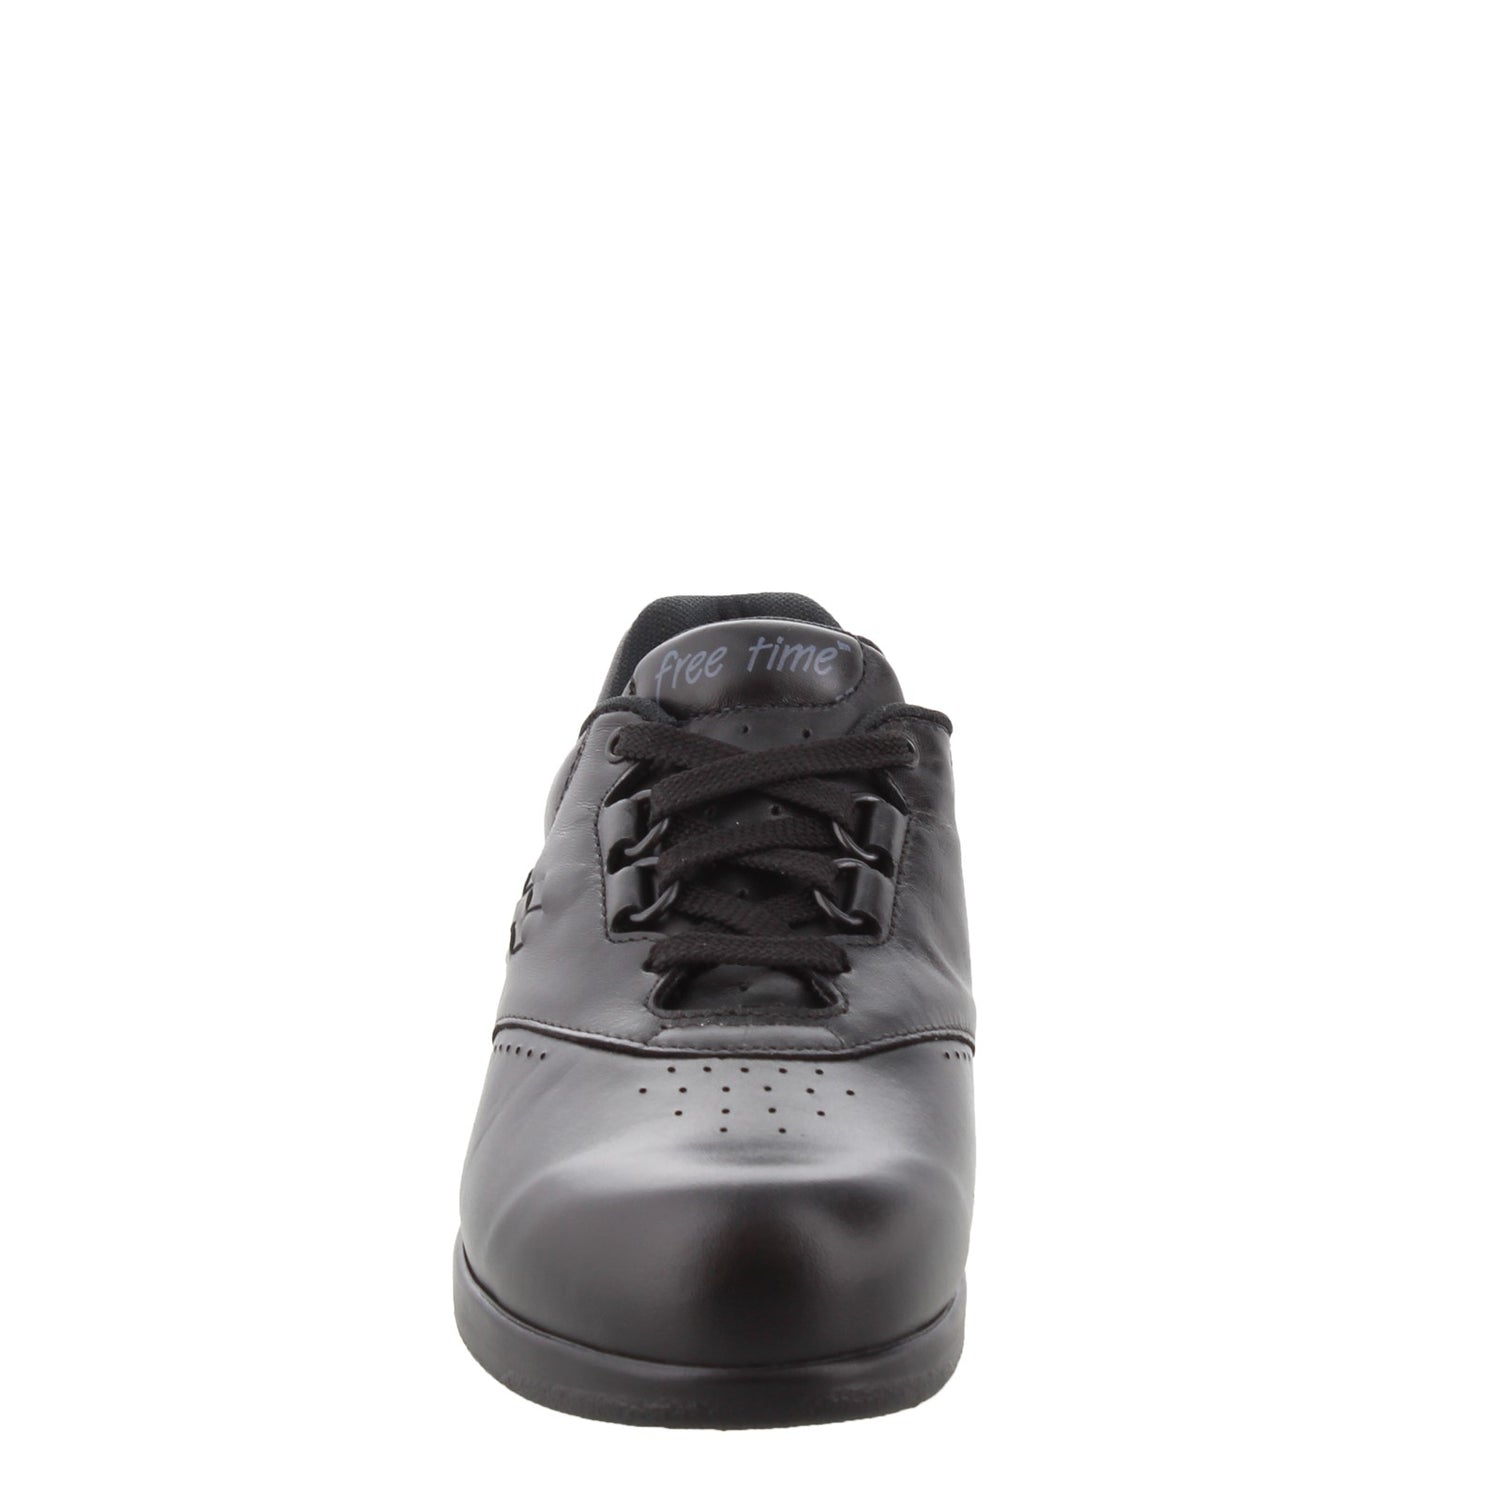 Peltz Shoes  Women's SAS Freetime Sneaker BLACK FREETIMBLK